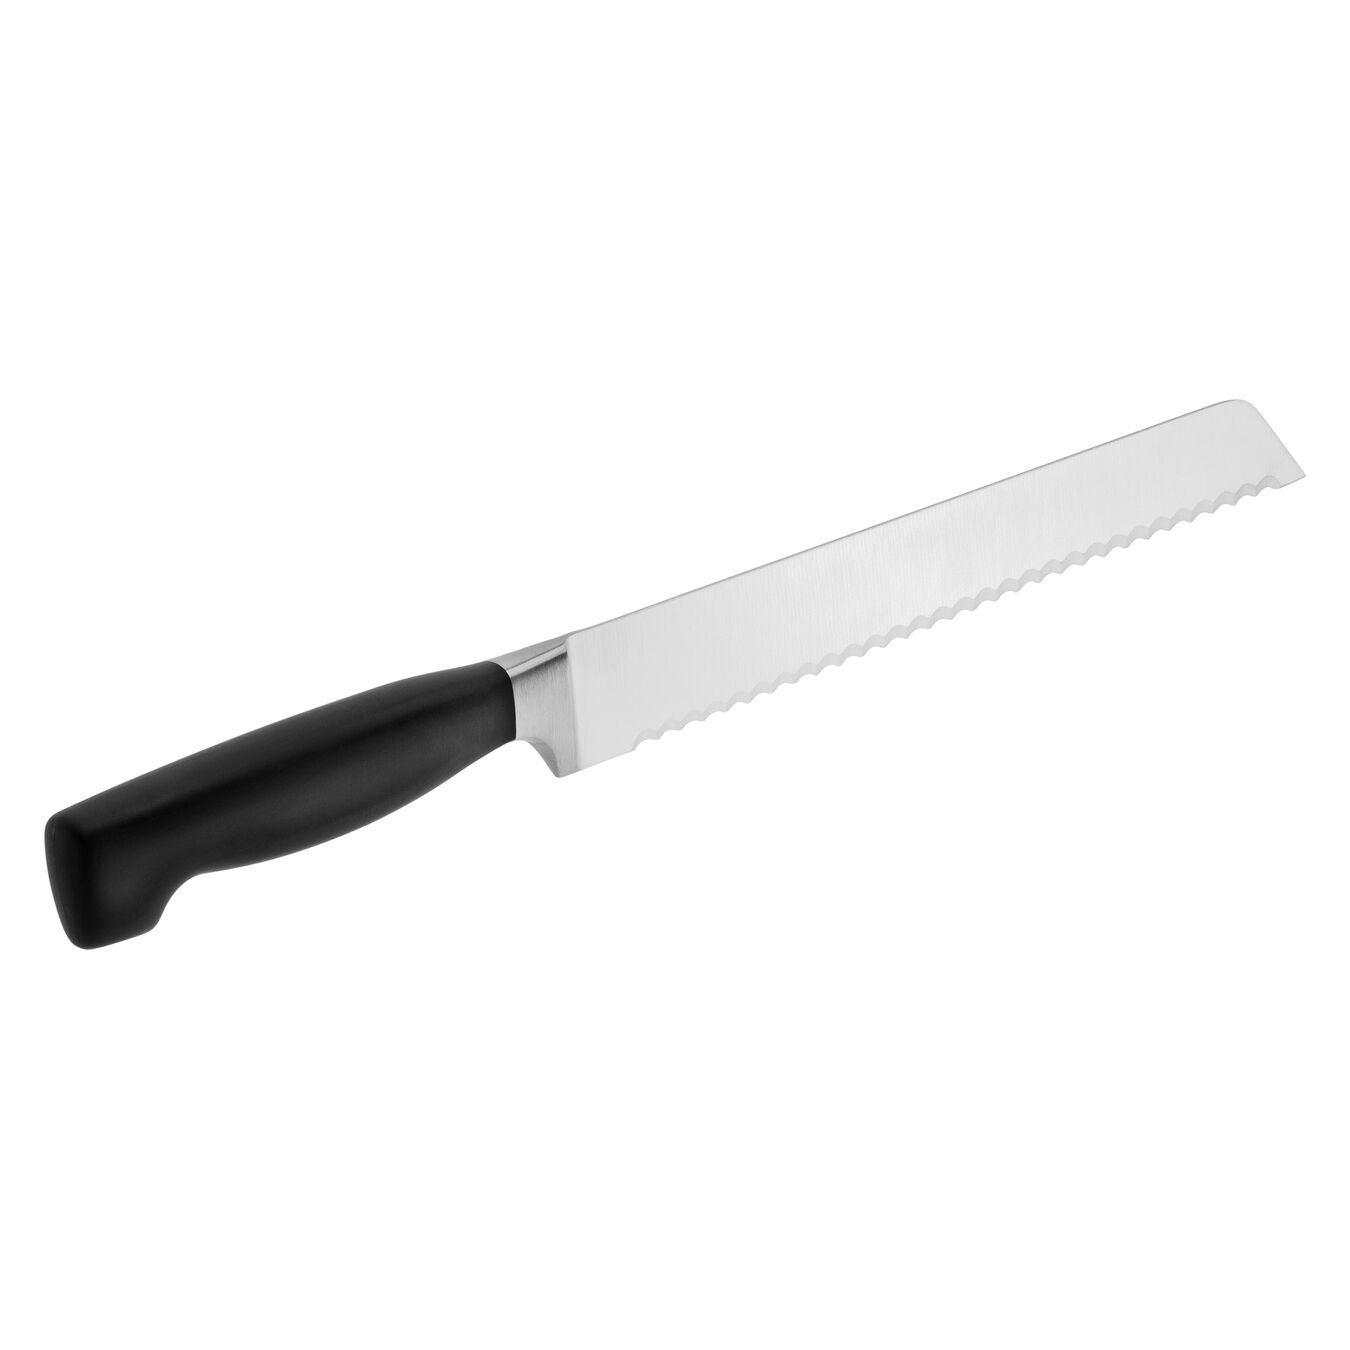 reverse side of knife on white background